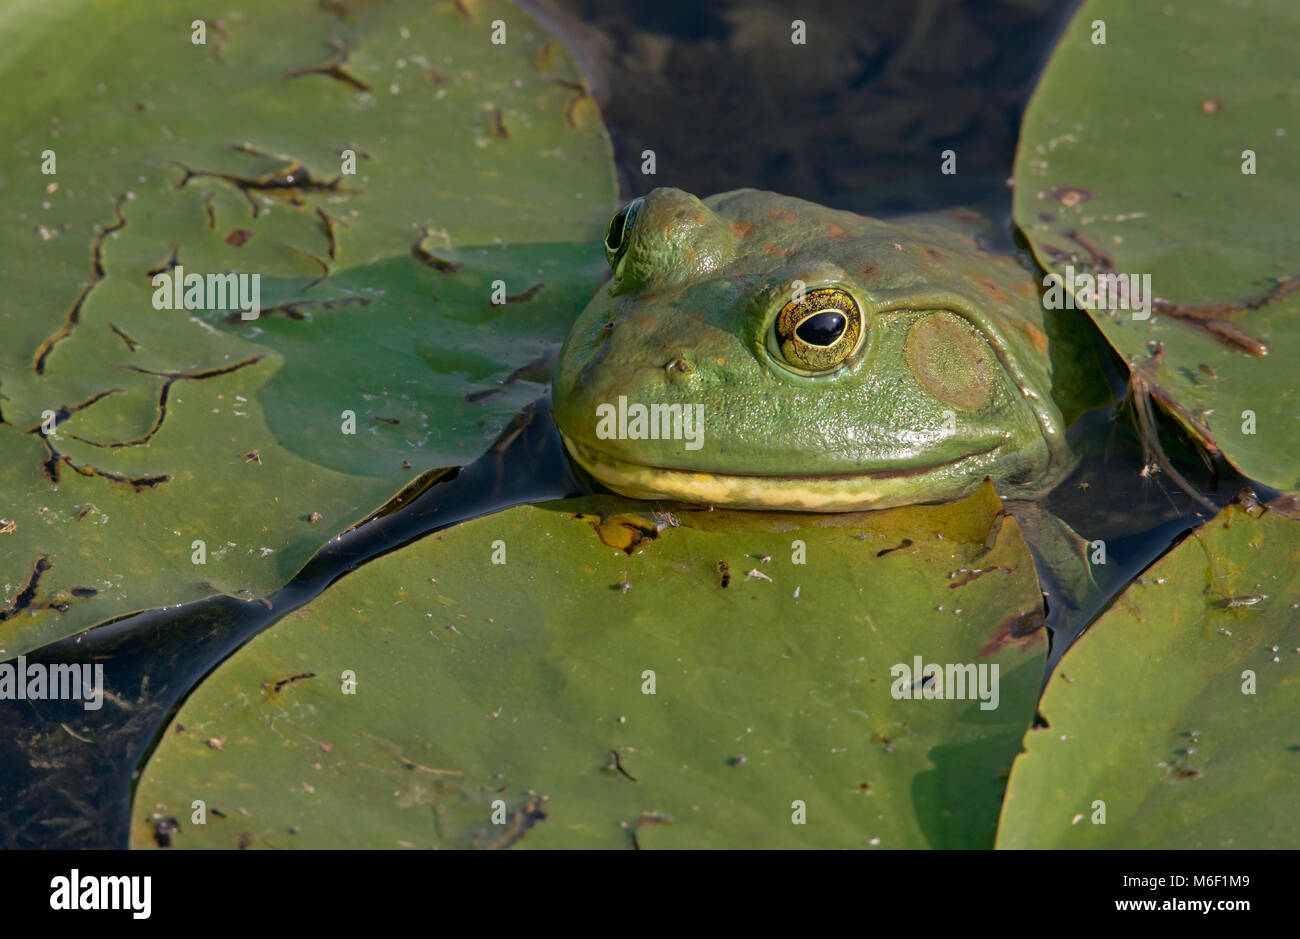 American Bullfrog (Lithobates catesbeiana, Rana catesbeiana), tra ninfee, E STATI UNITI D'AMERICA, da saltare Moody/Dembinsky Foto Assoc Foto Stock